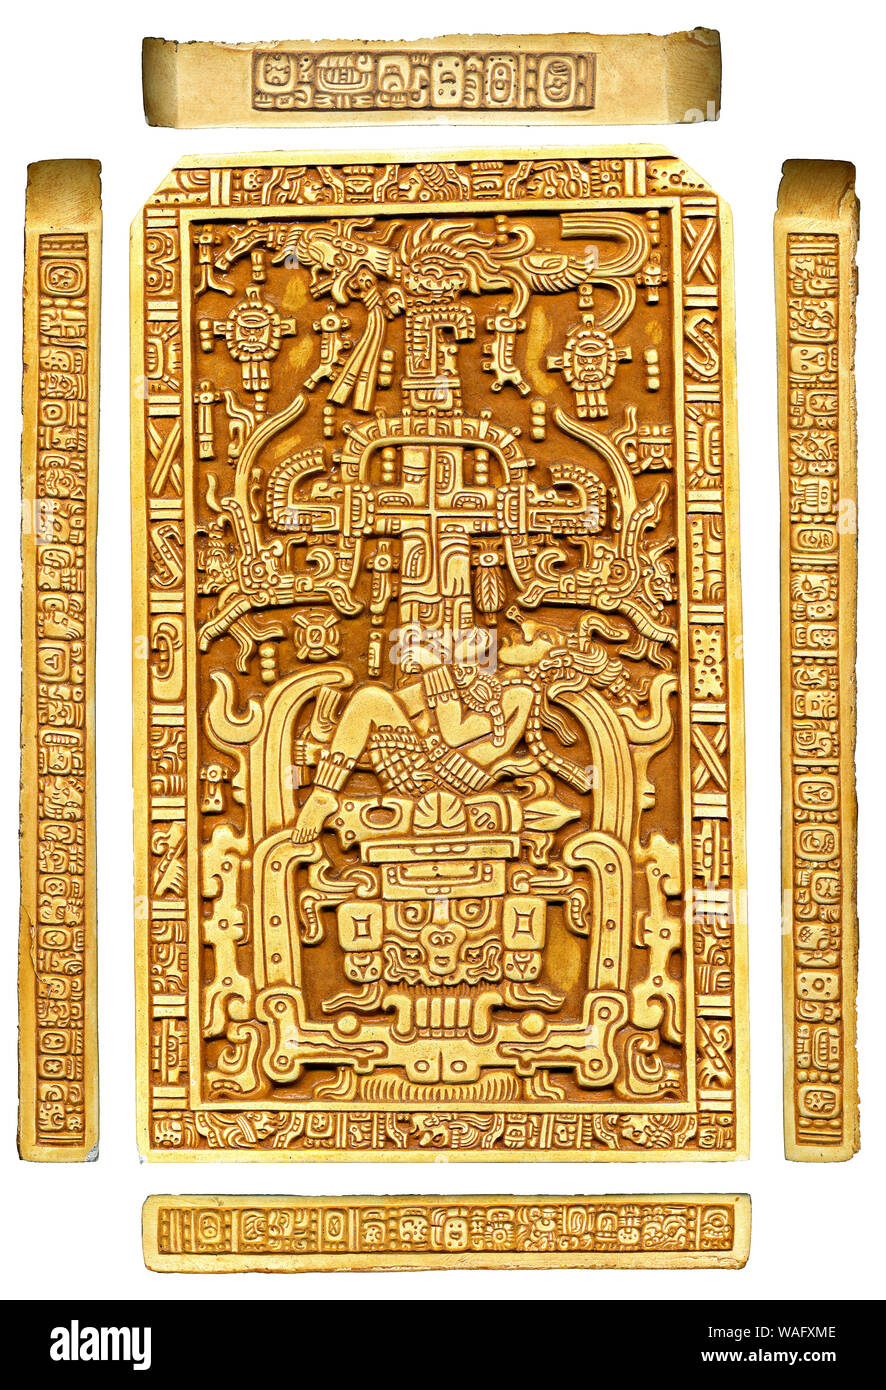 Aztec World Tree